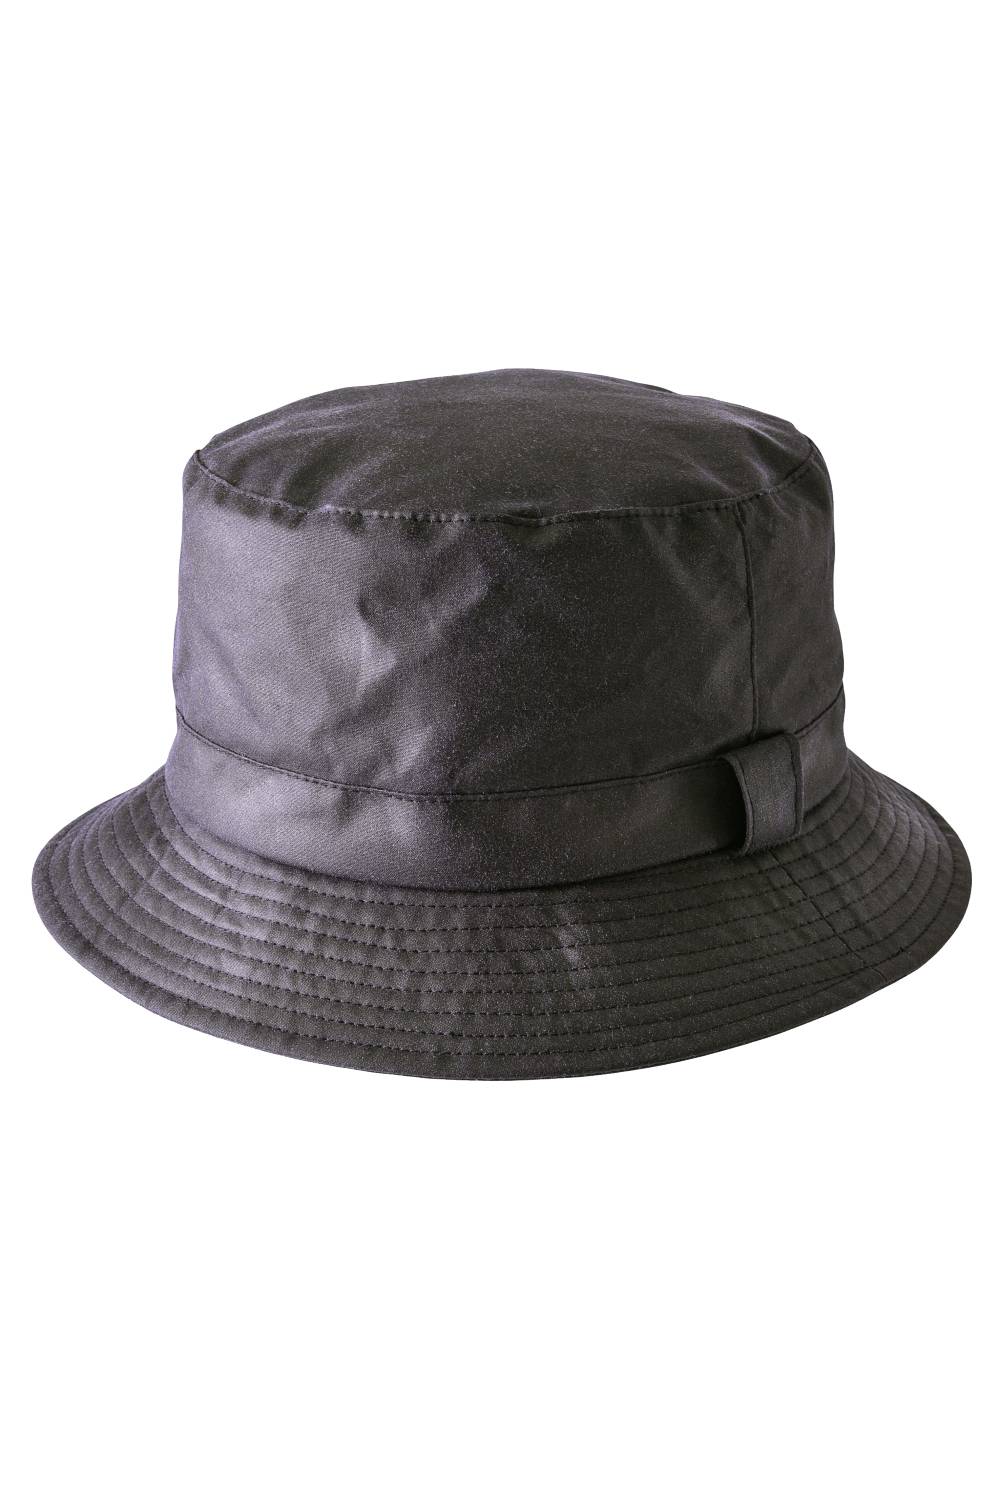 Heather Johnston Wax Bush Hat- black 